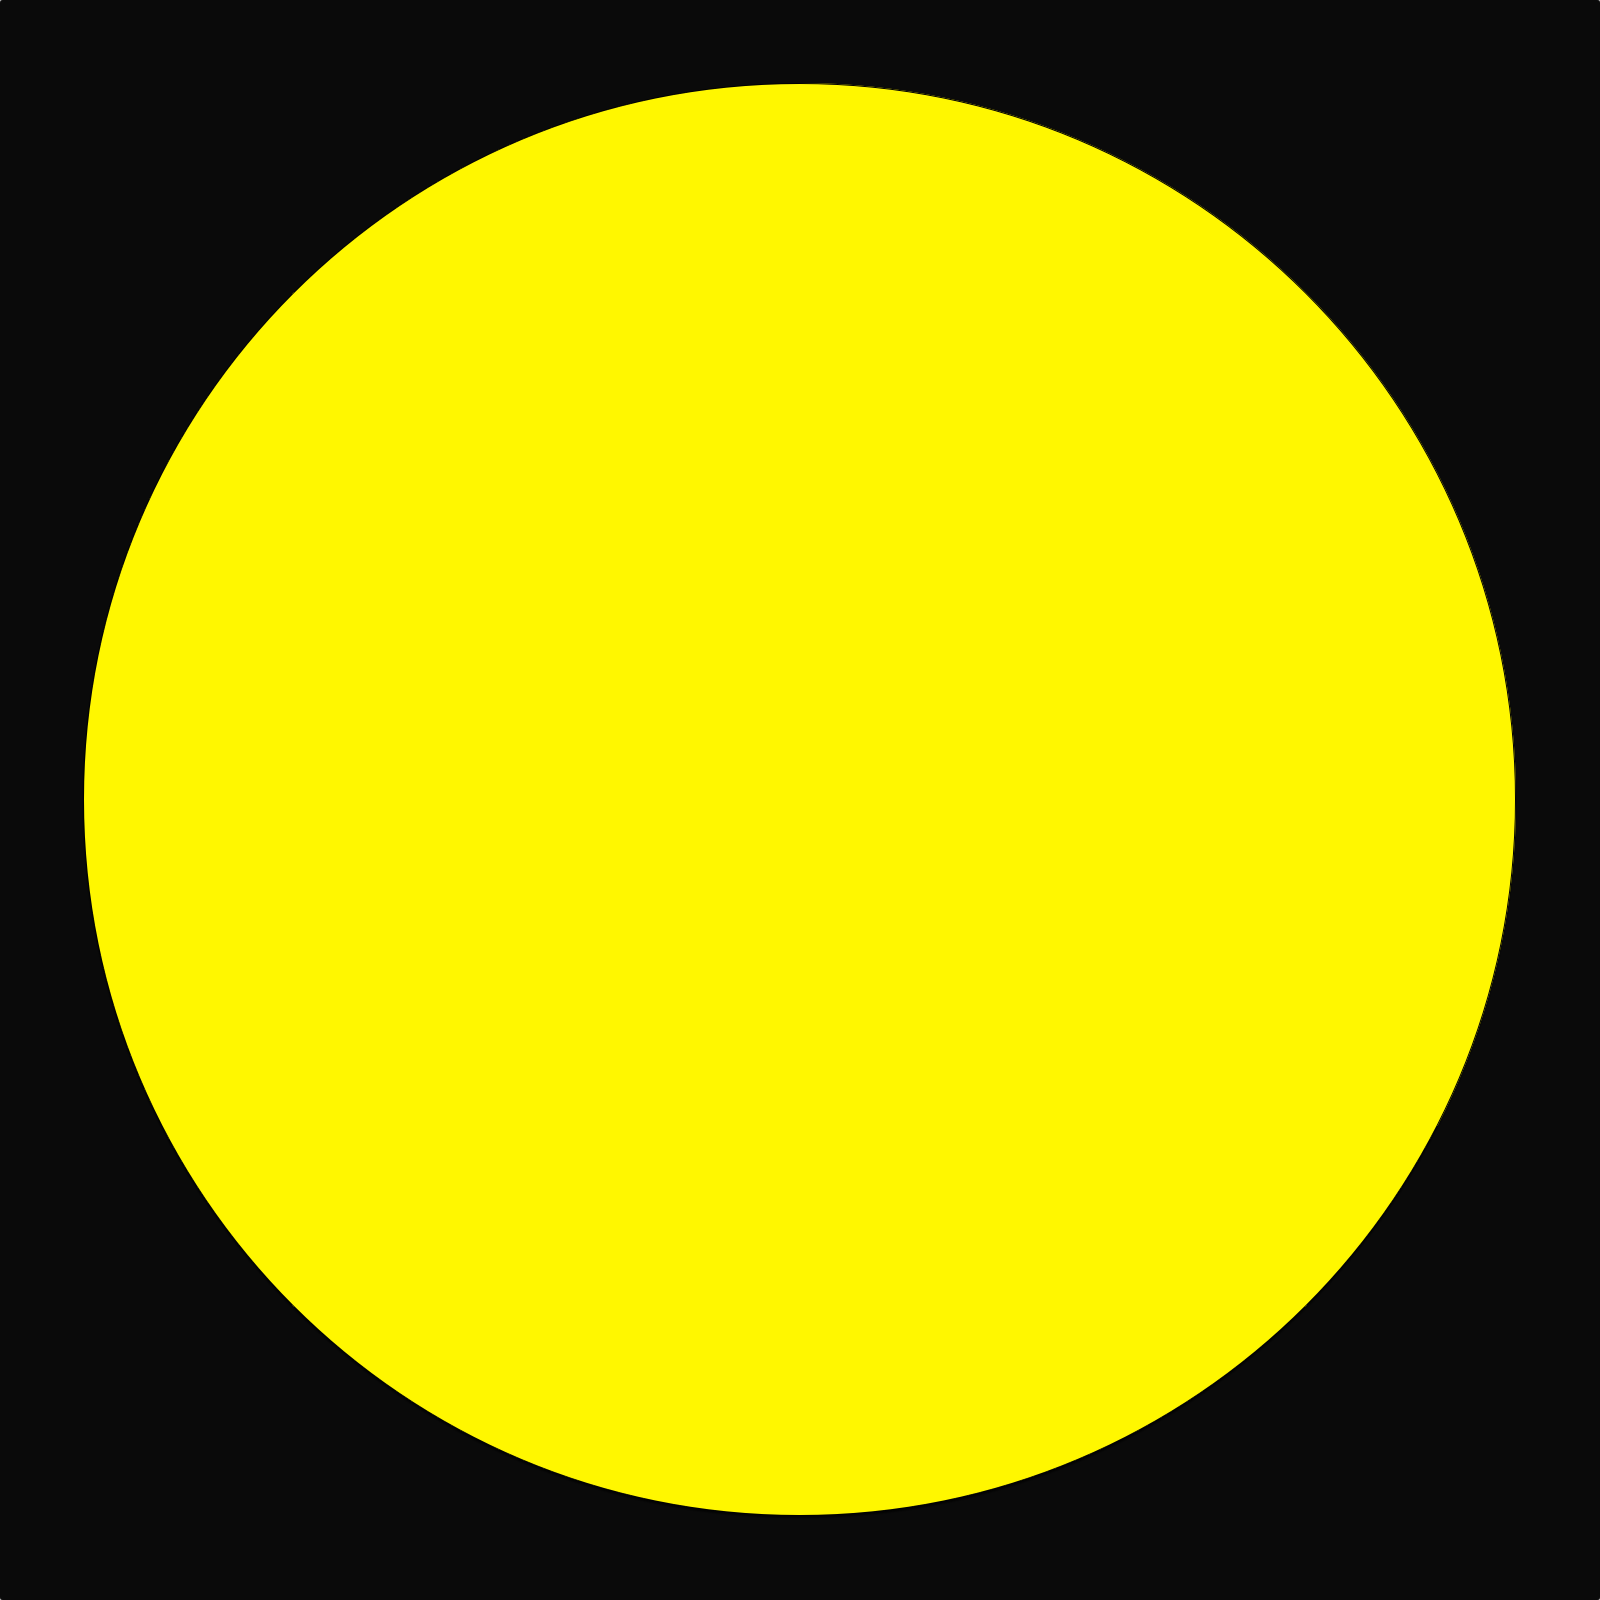 Желтый круг для слабовидящих. Желтый круг. Желтые кружочки. Желтый кружок. Круг желтого цвета.